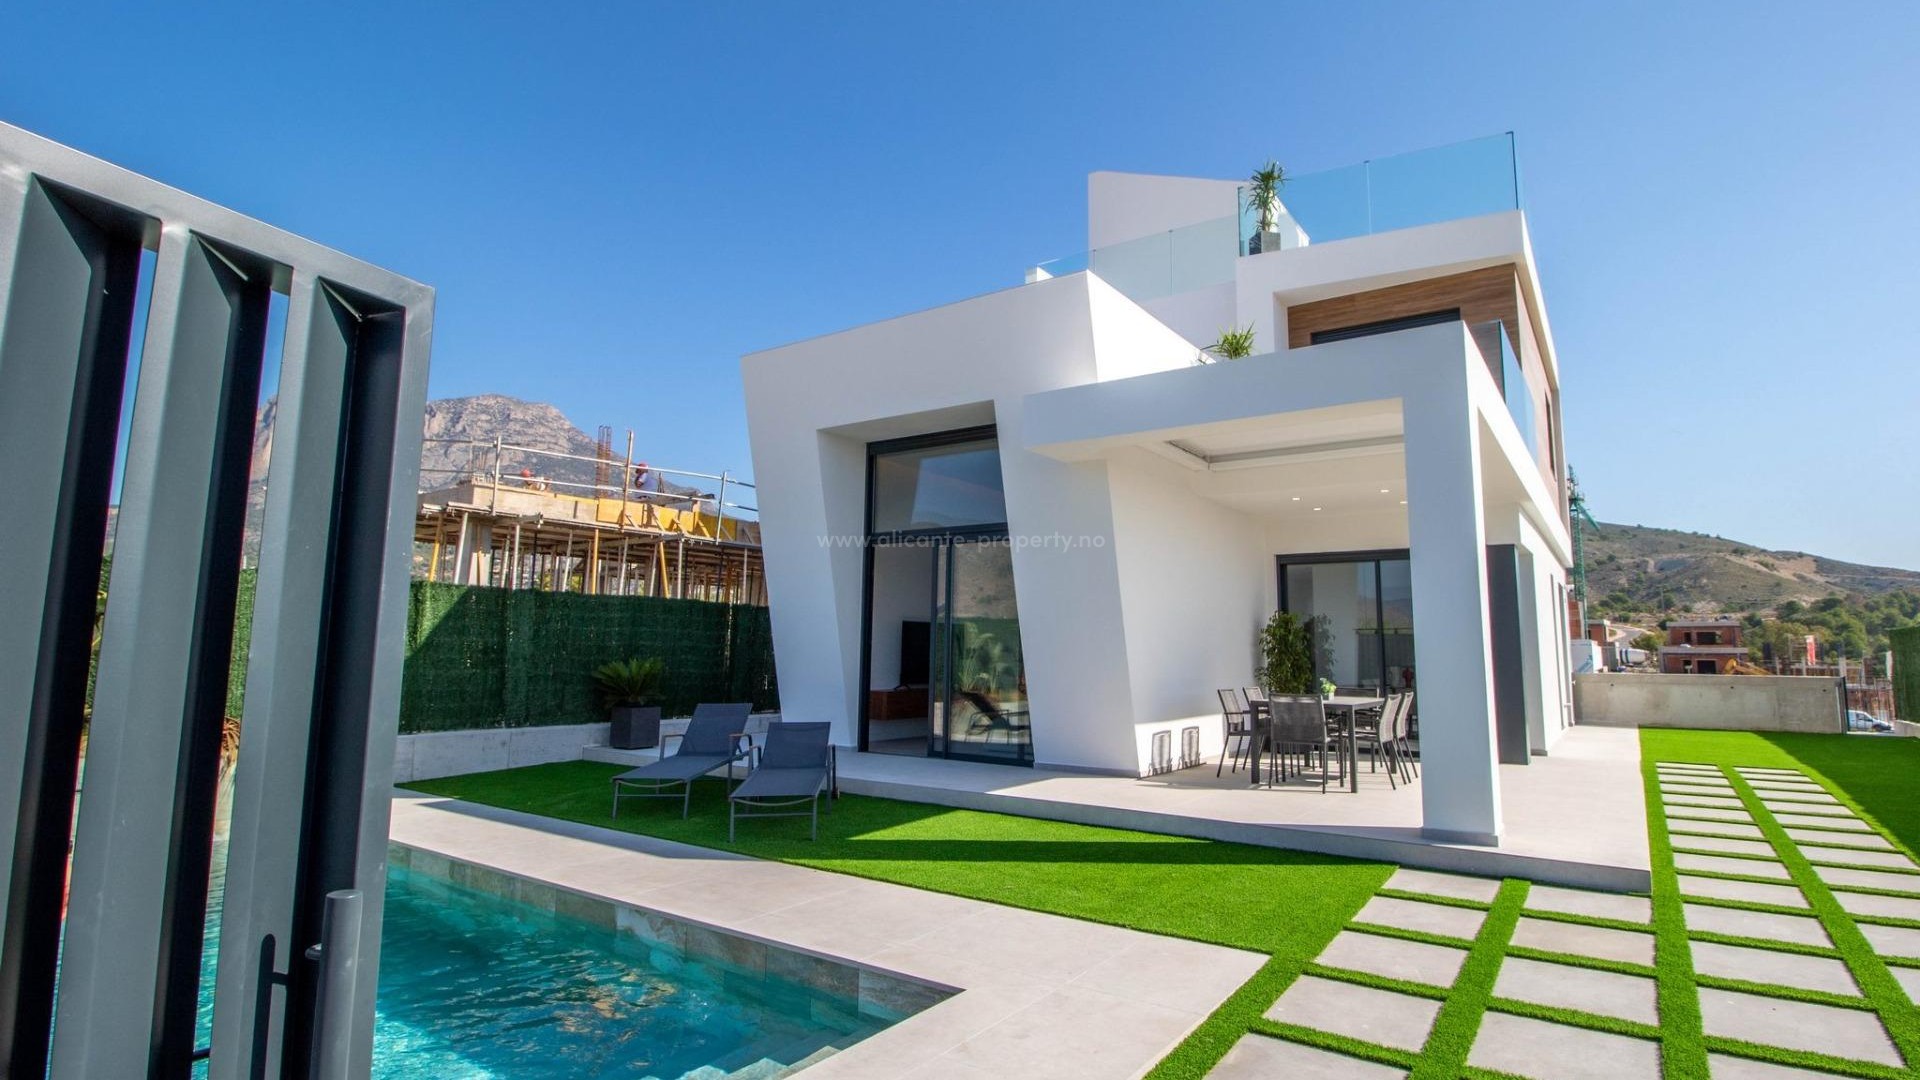 22 villaer/hus i Finestrat ved Puig Campana Golf (1 min.), 3 soverom, 3 bad, terrasse, solarium, privat hage med svømmebasseng og parkeringsplass.